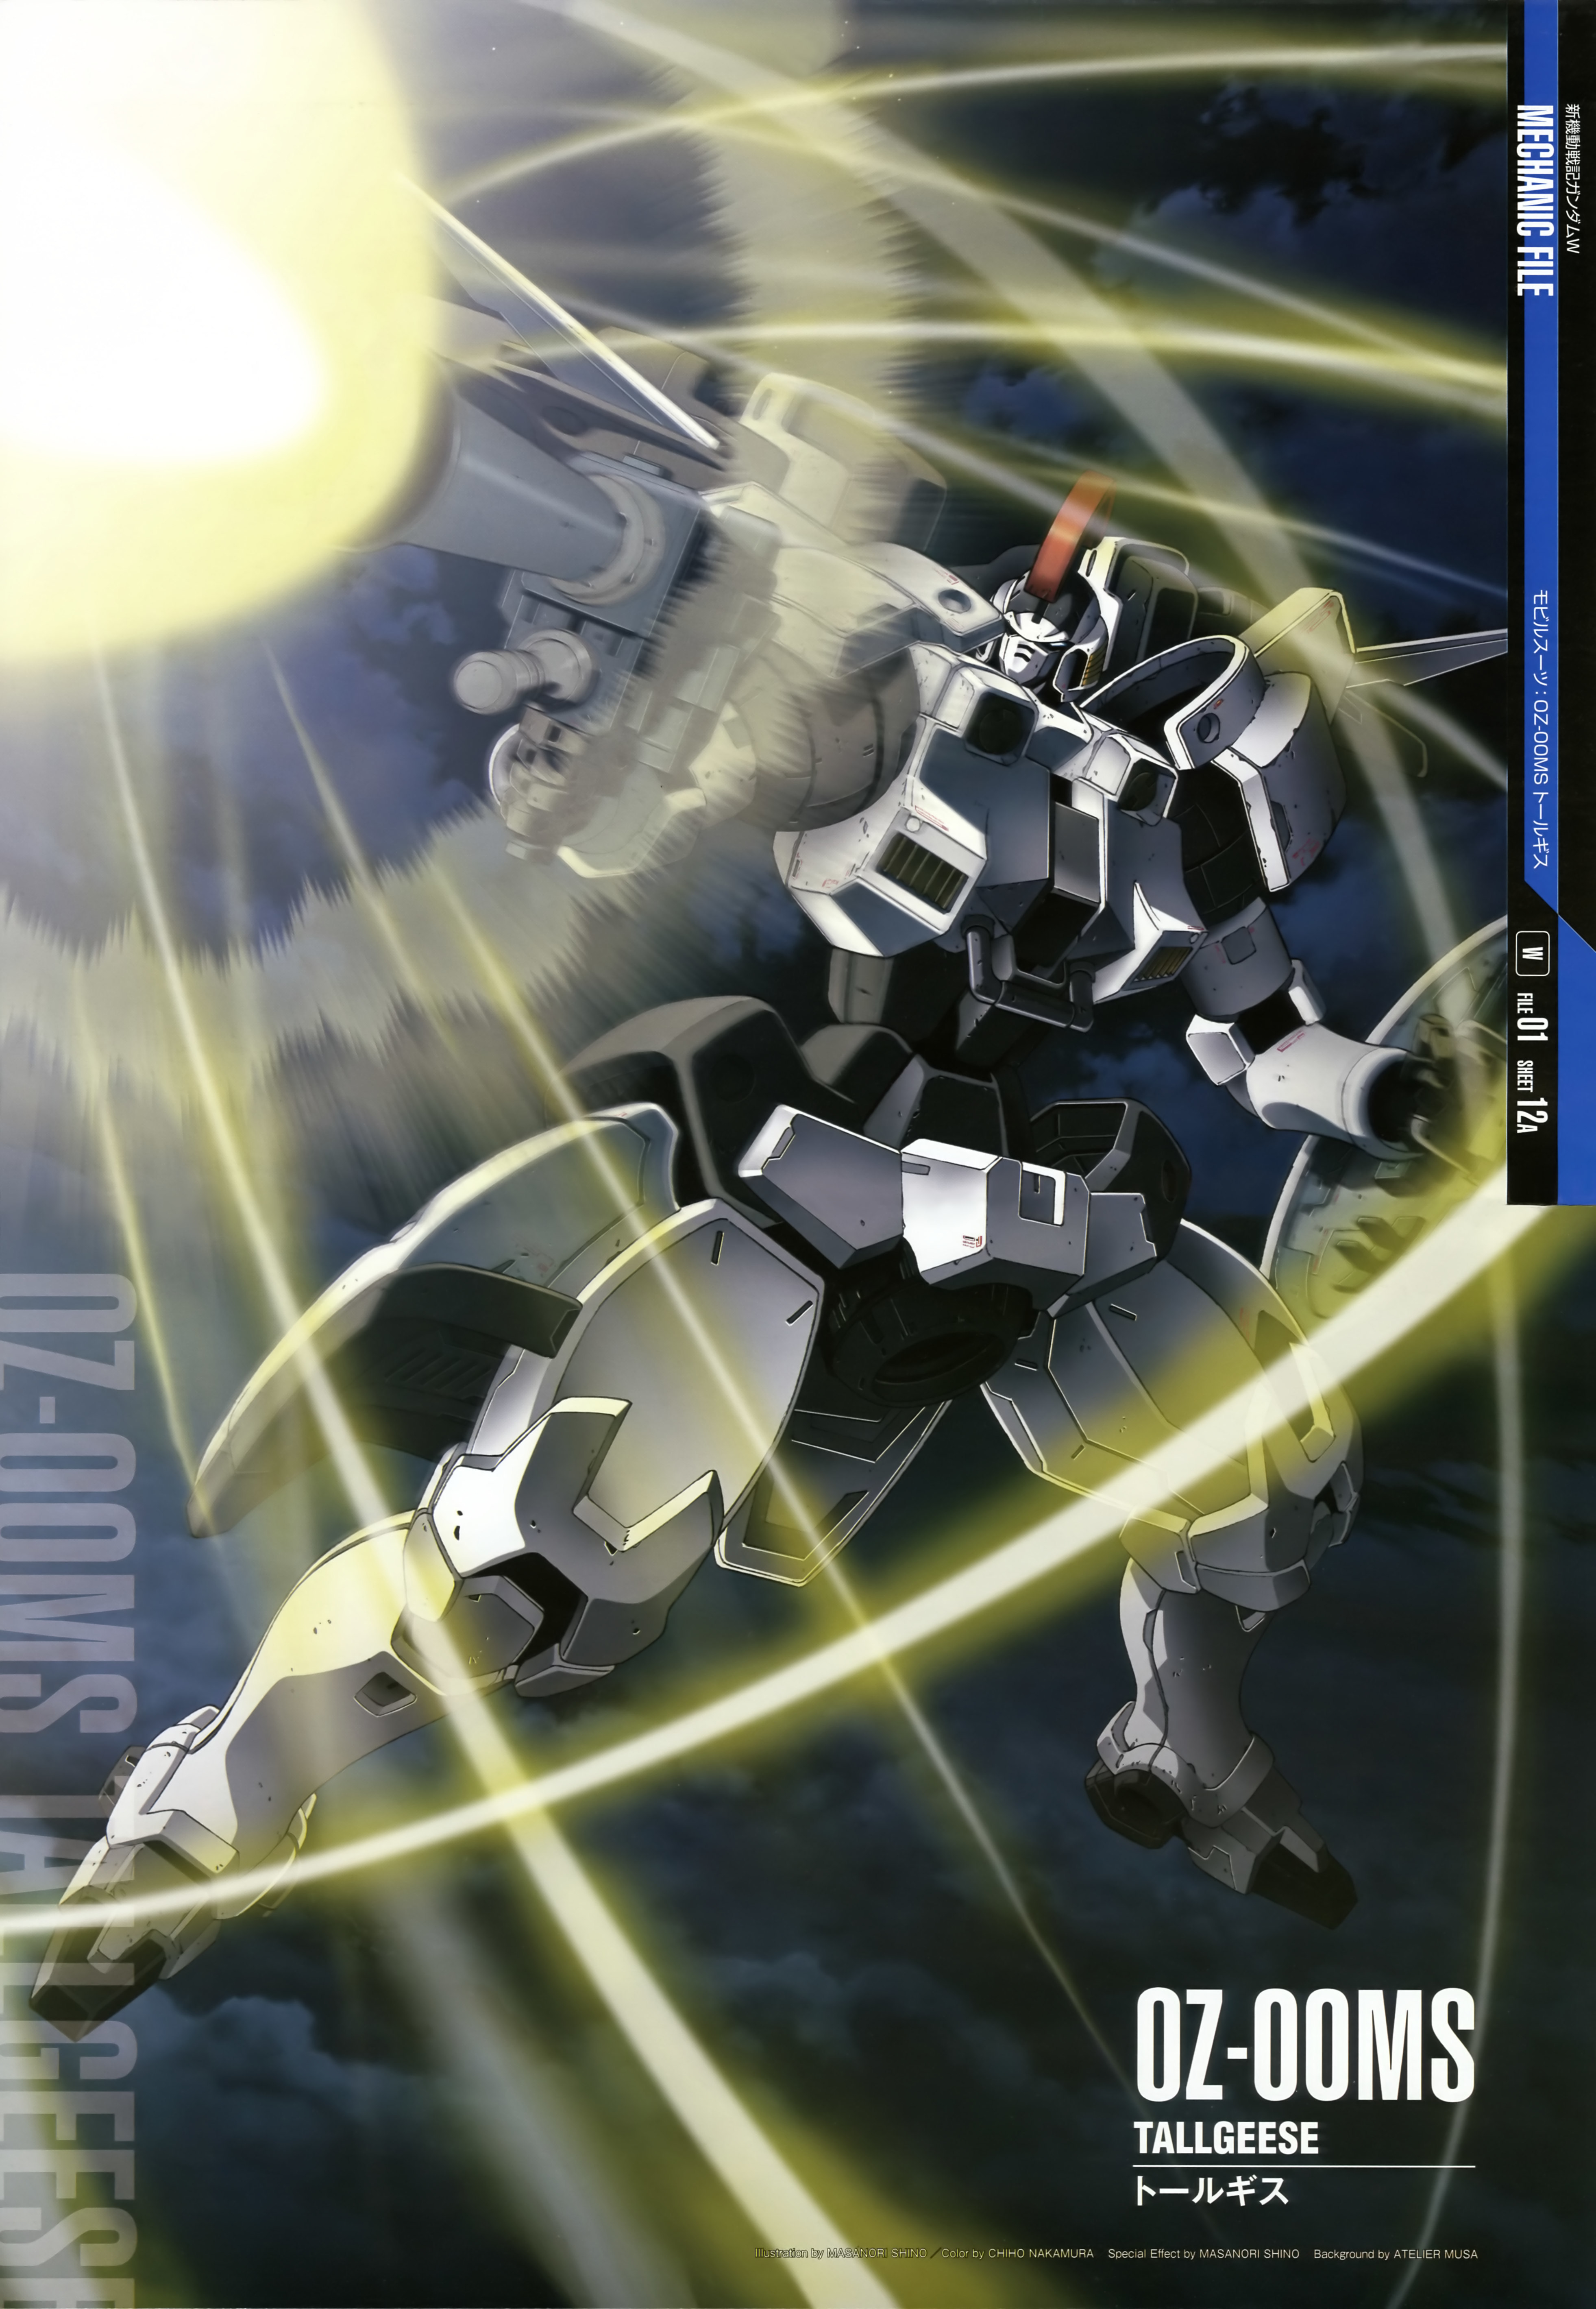 Anime 3925x5677 Tallgeese anime mechs Mobile Suit Gundam Wing Super Robot Taisen Mobile Suit artwork digital art